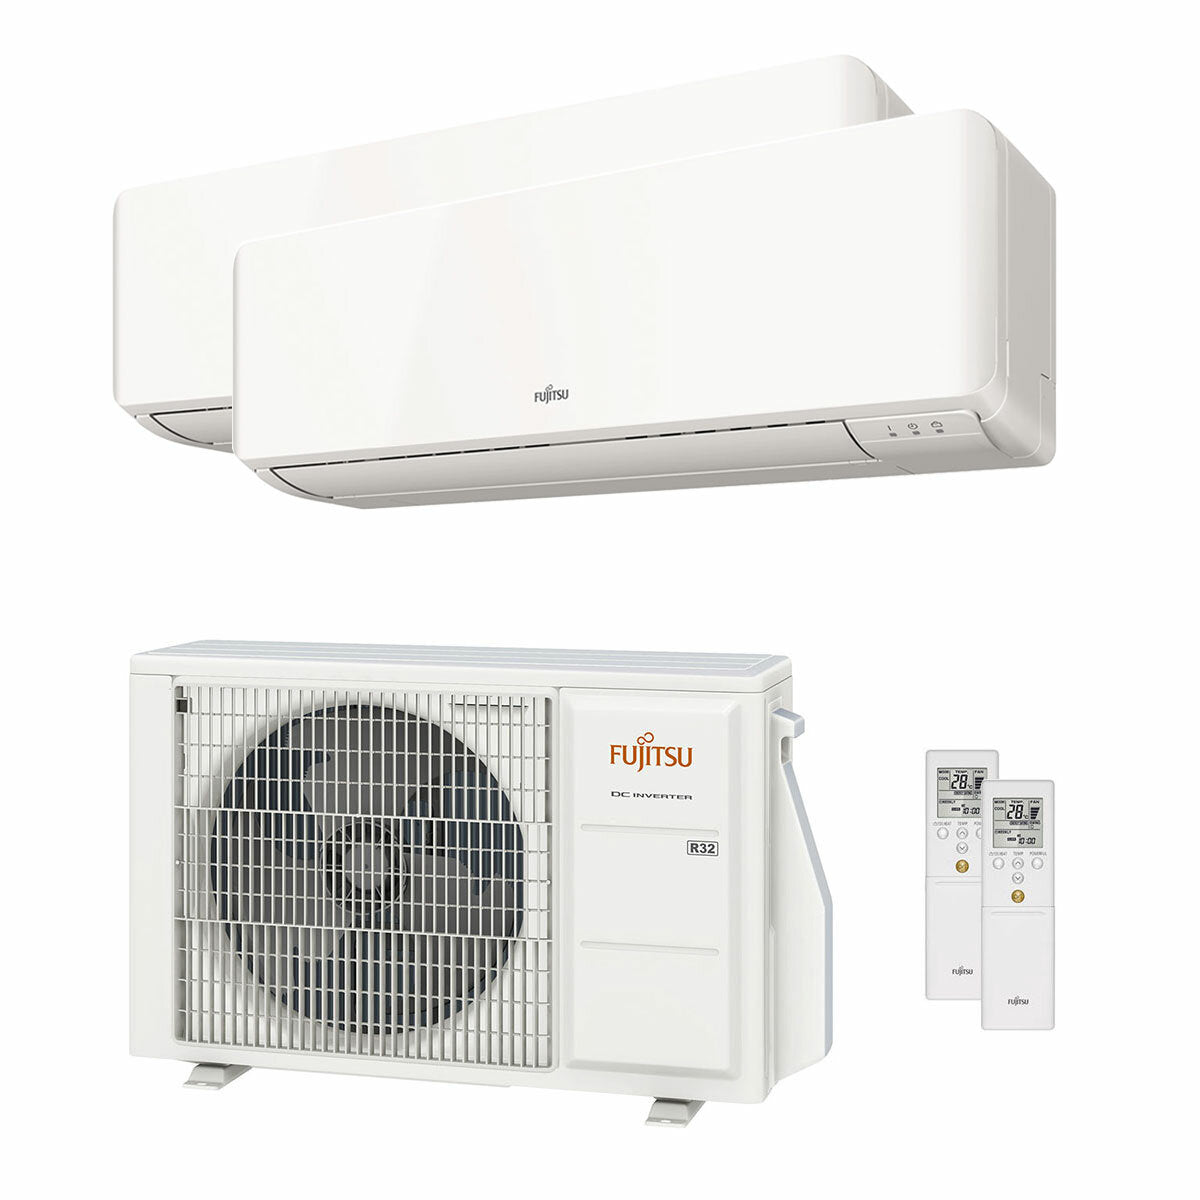 Fujitsu KM WiFi Series dual split air conditioner 7000+7000 BTU inverter A+++ external unit 4 kW